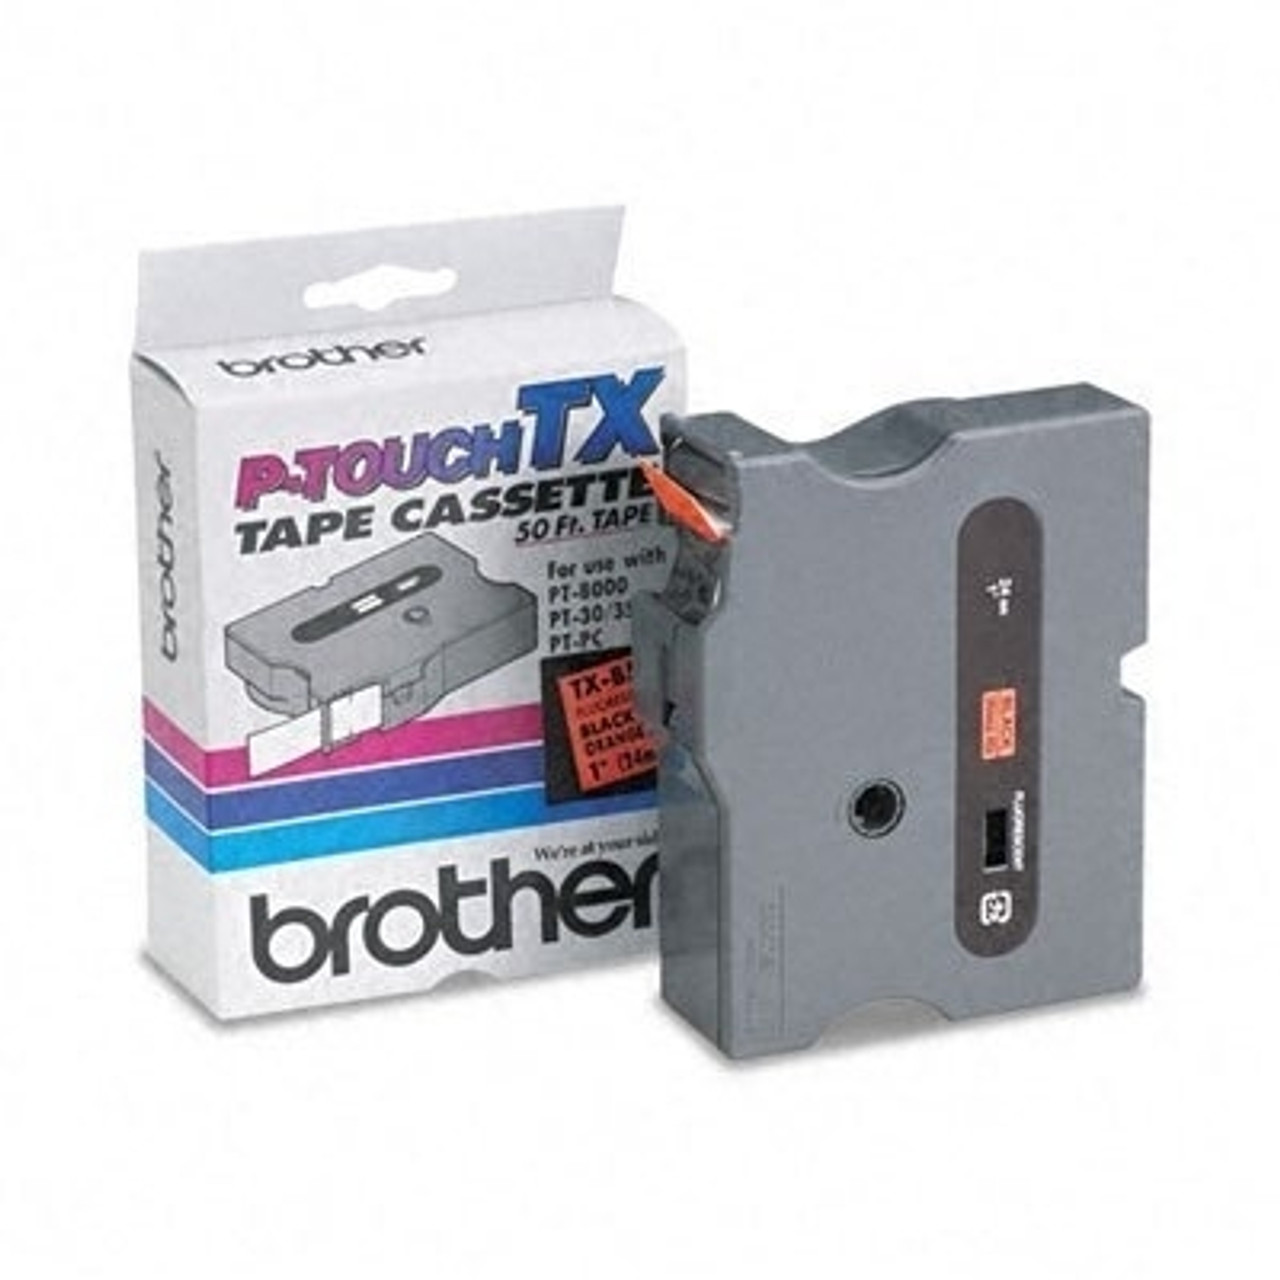 Brother TXB511 Printer Label